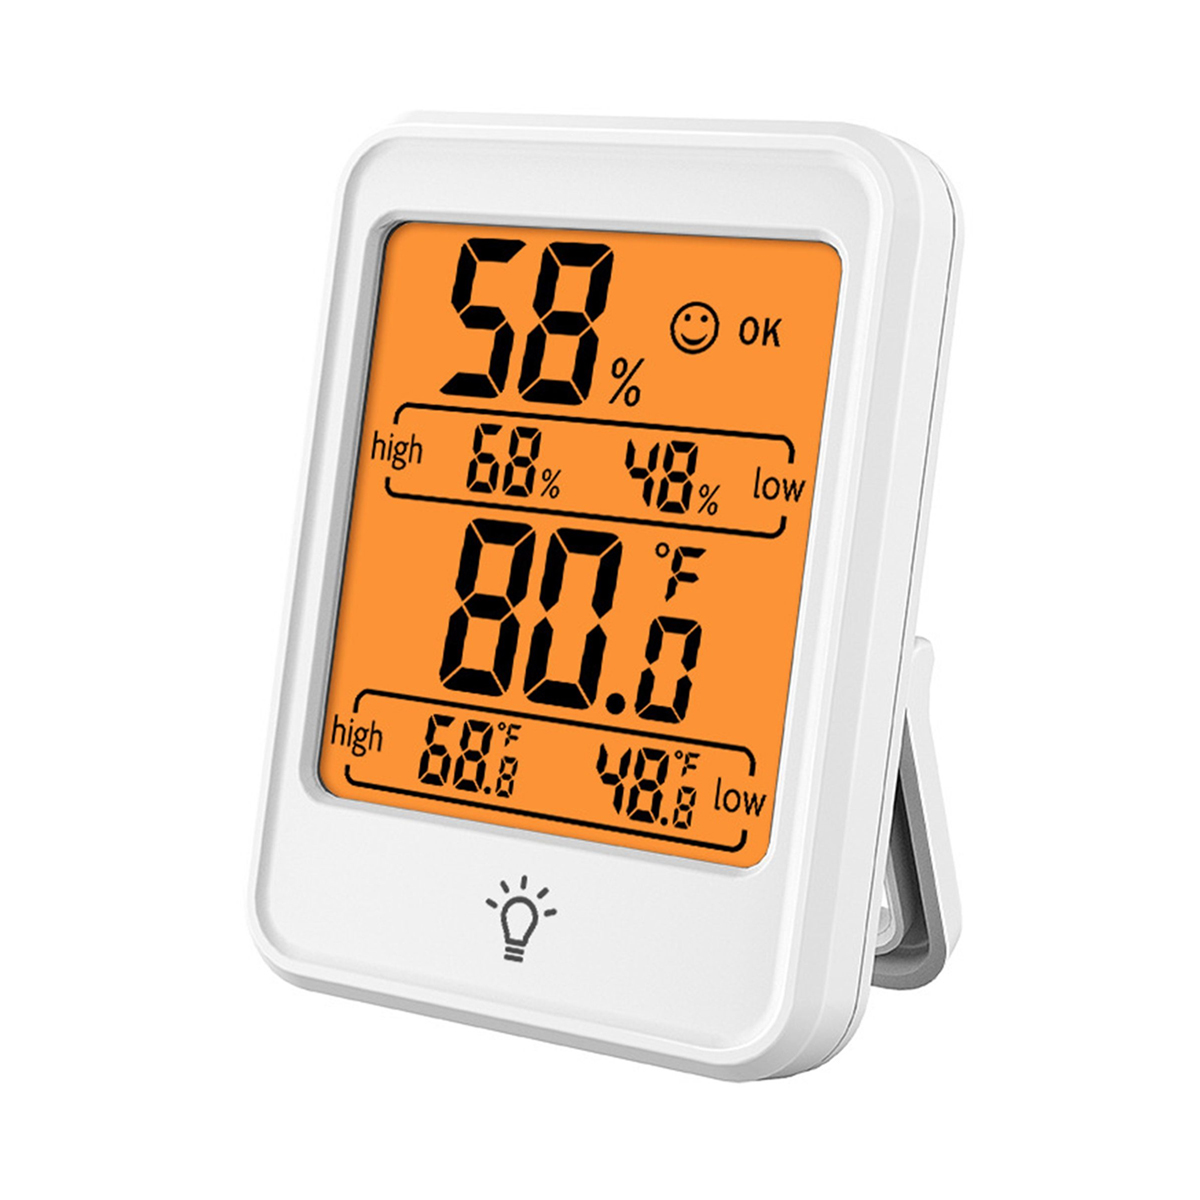 BABY mit Thermometer,Raumthermometer,Hygrometer Digitales JA Hintergrundbeleuchtung Innen,Display Hygrothermometer